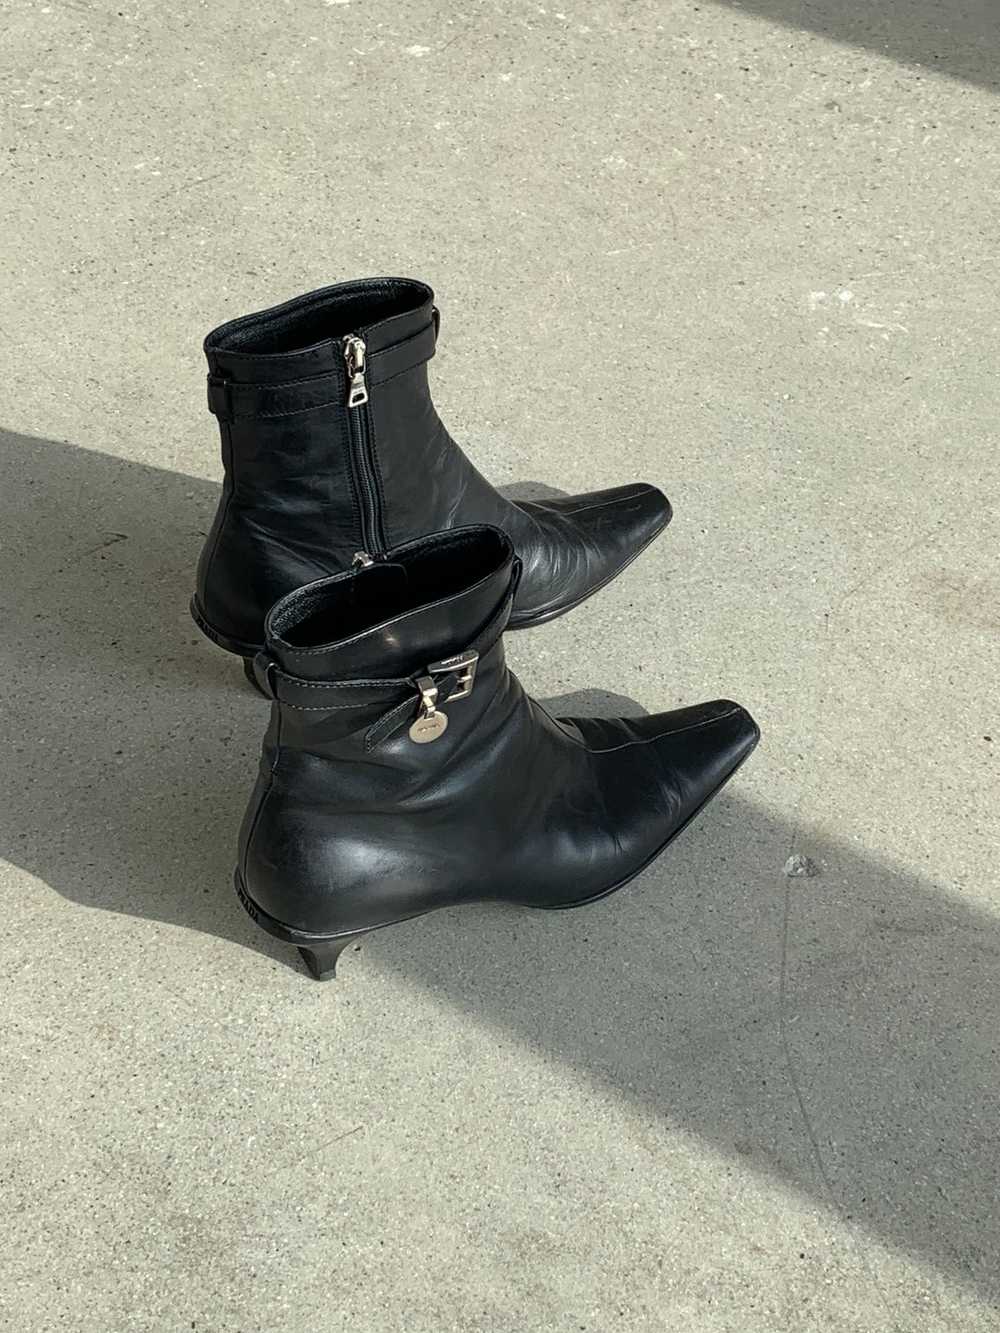 Prada ankle boots - image 7